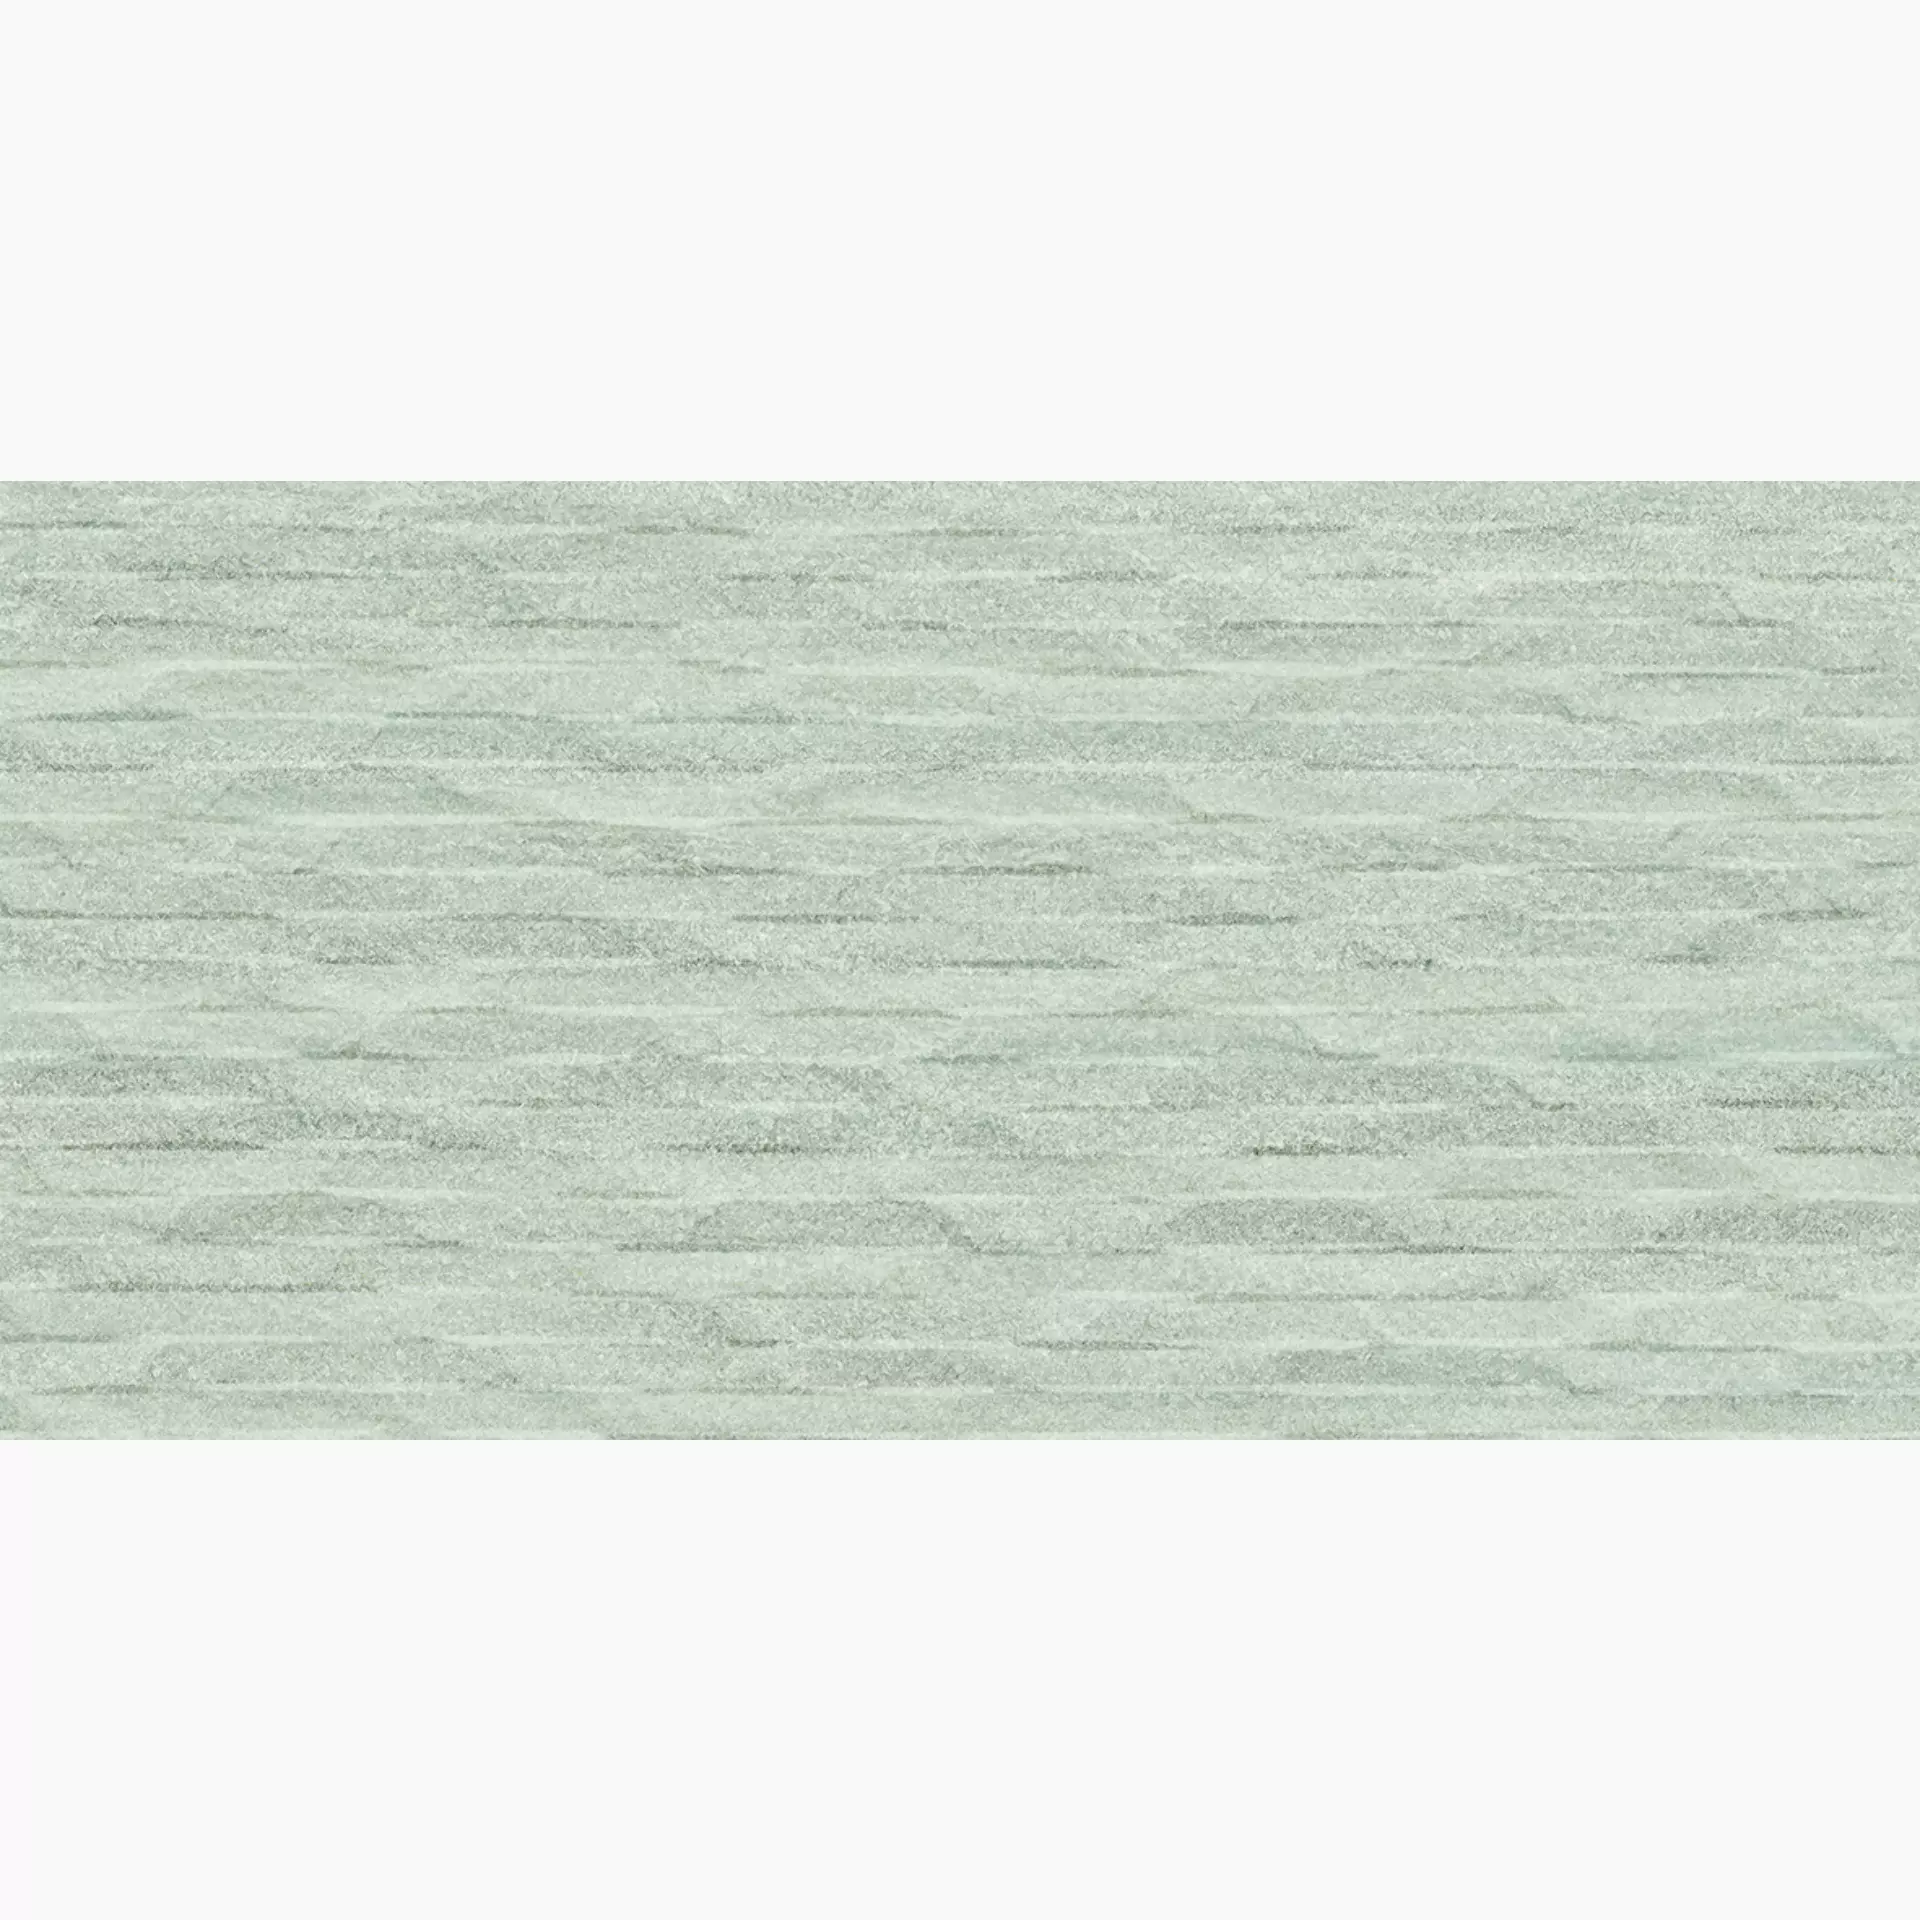 Ergon Elegance Pro Grey Naturale Grey EK89 natur 30x60cm Mural rektifiziert 9,5mm